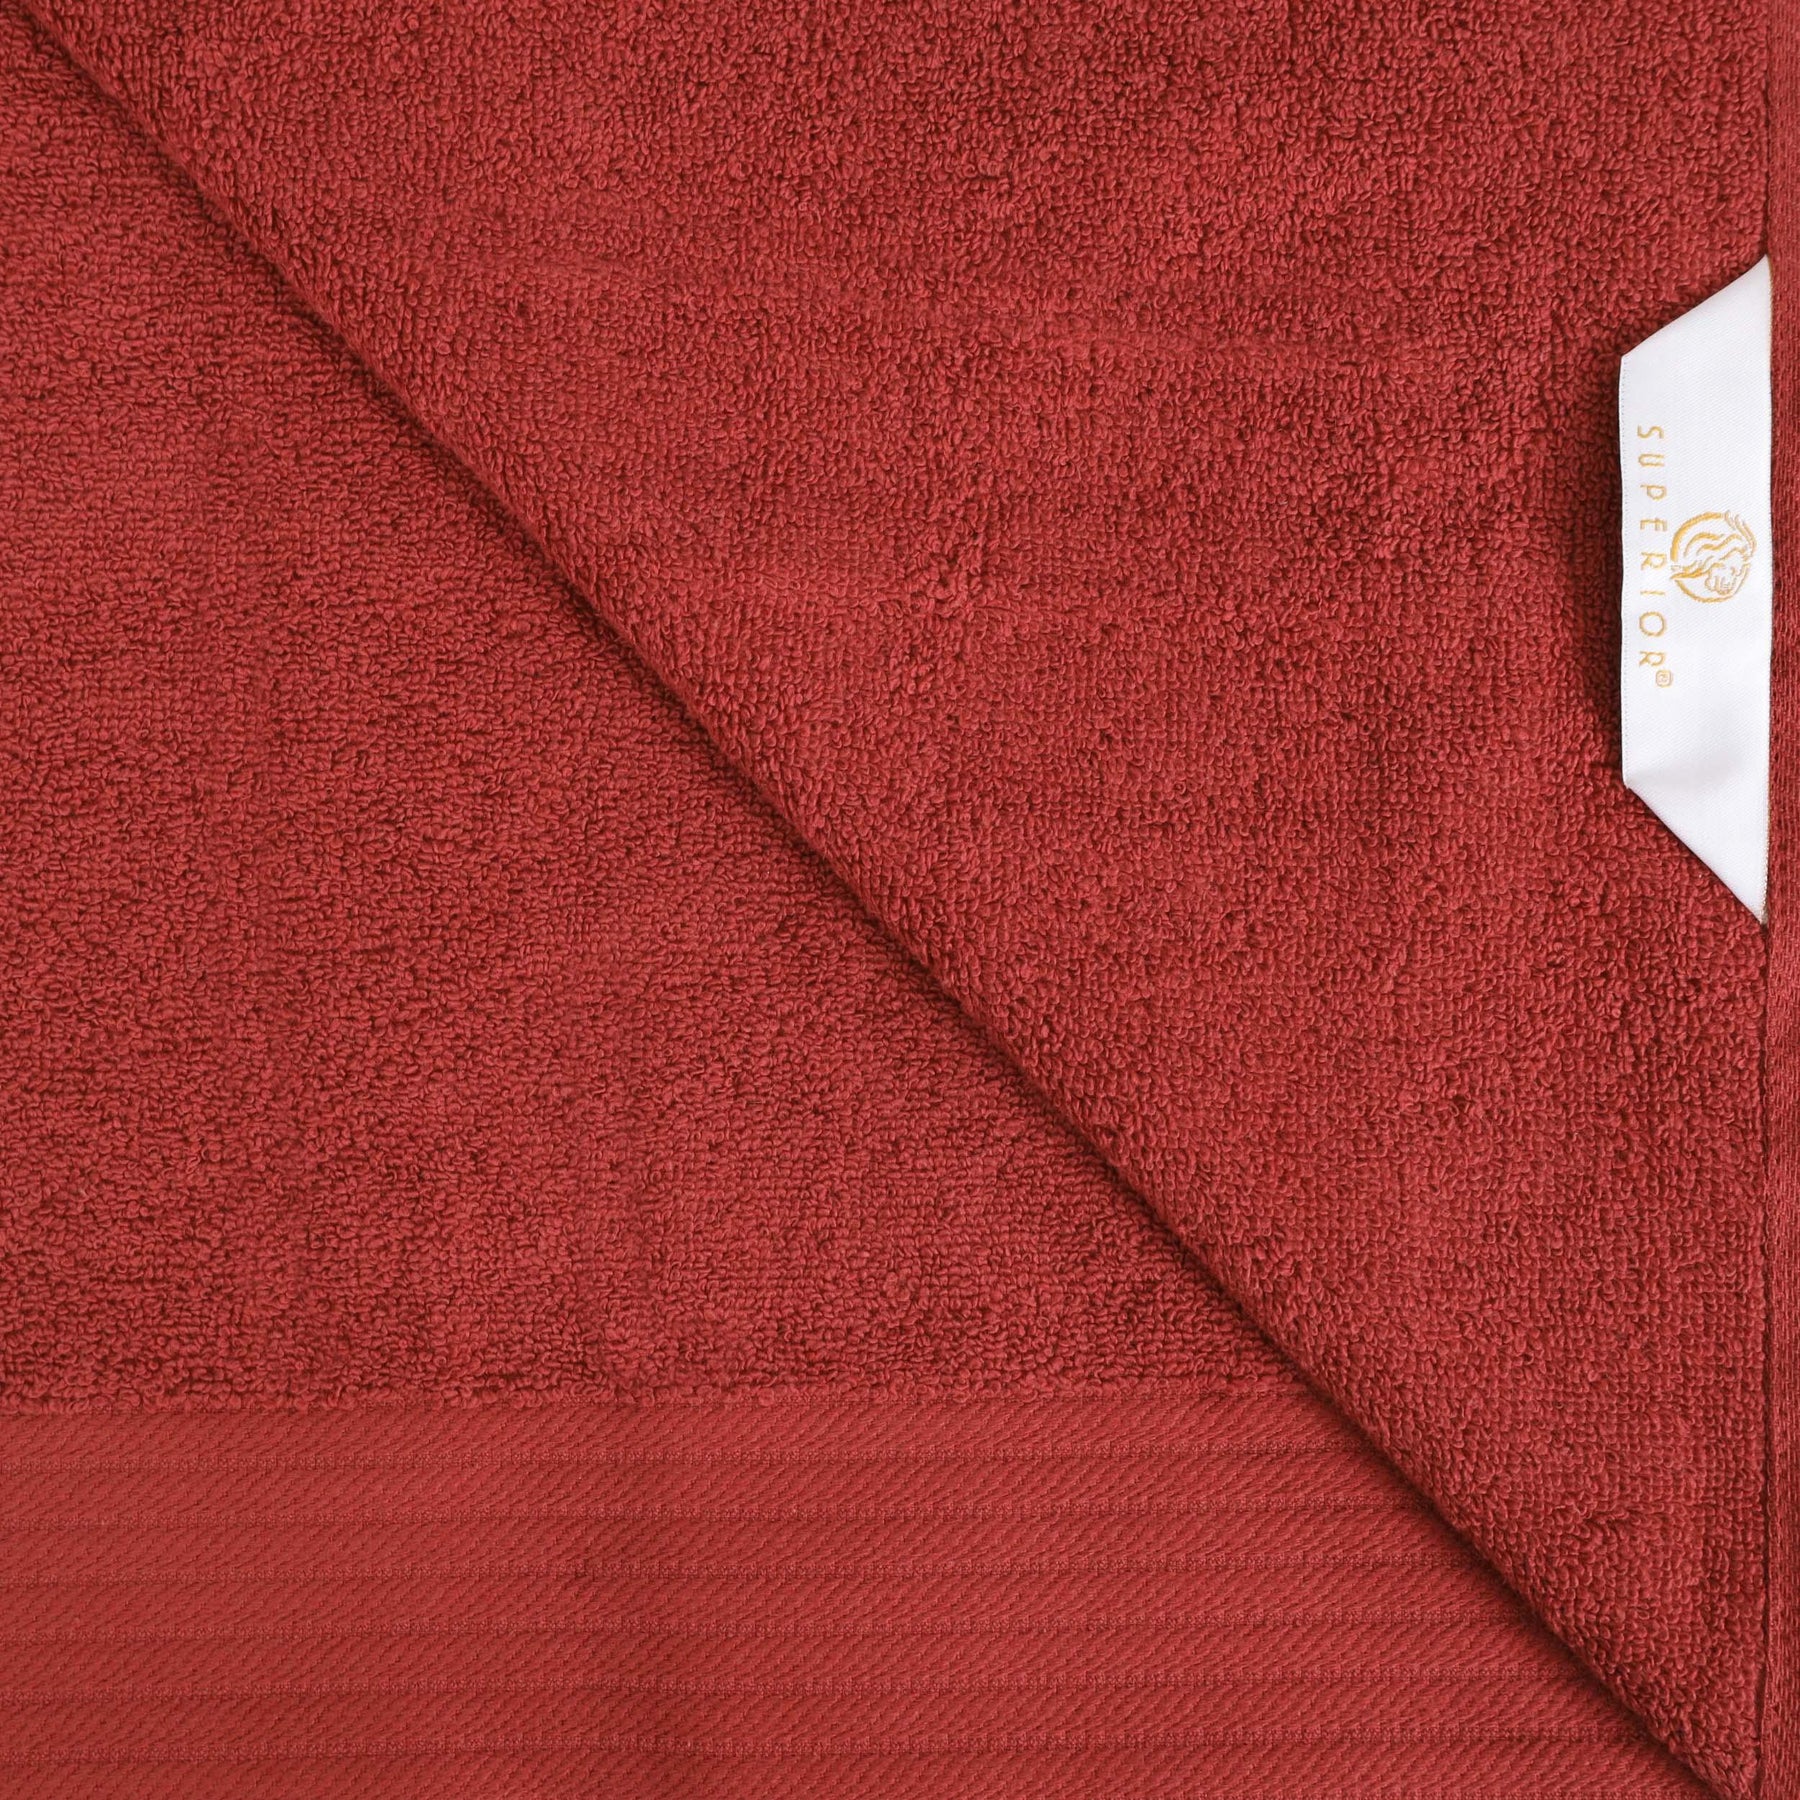 Premium Turkish Cotton Jacquard Herringbone and Solid 4-Piece Bath Towel Set - Maroon